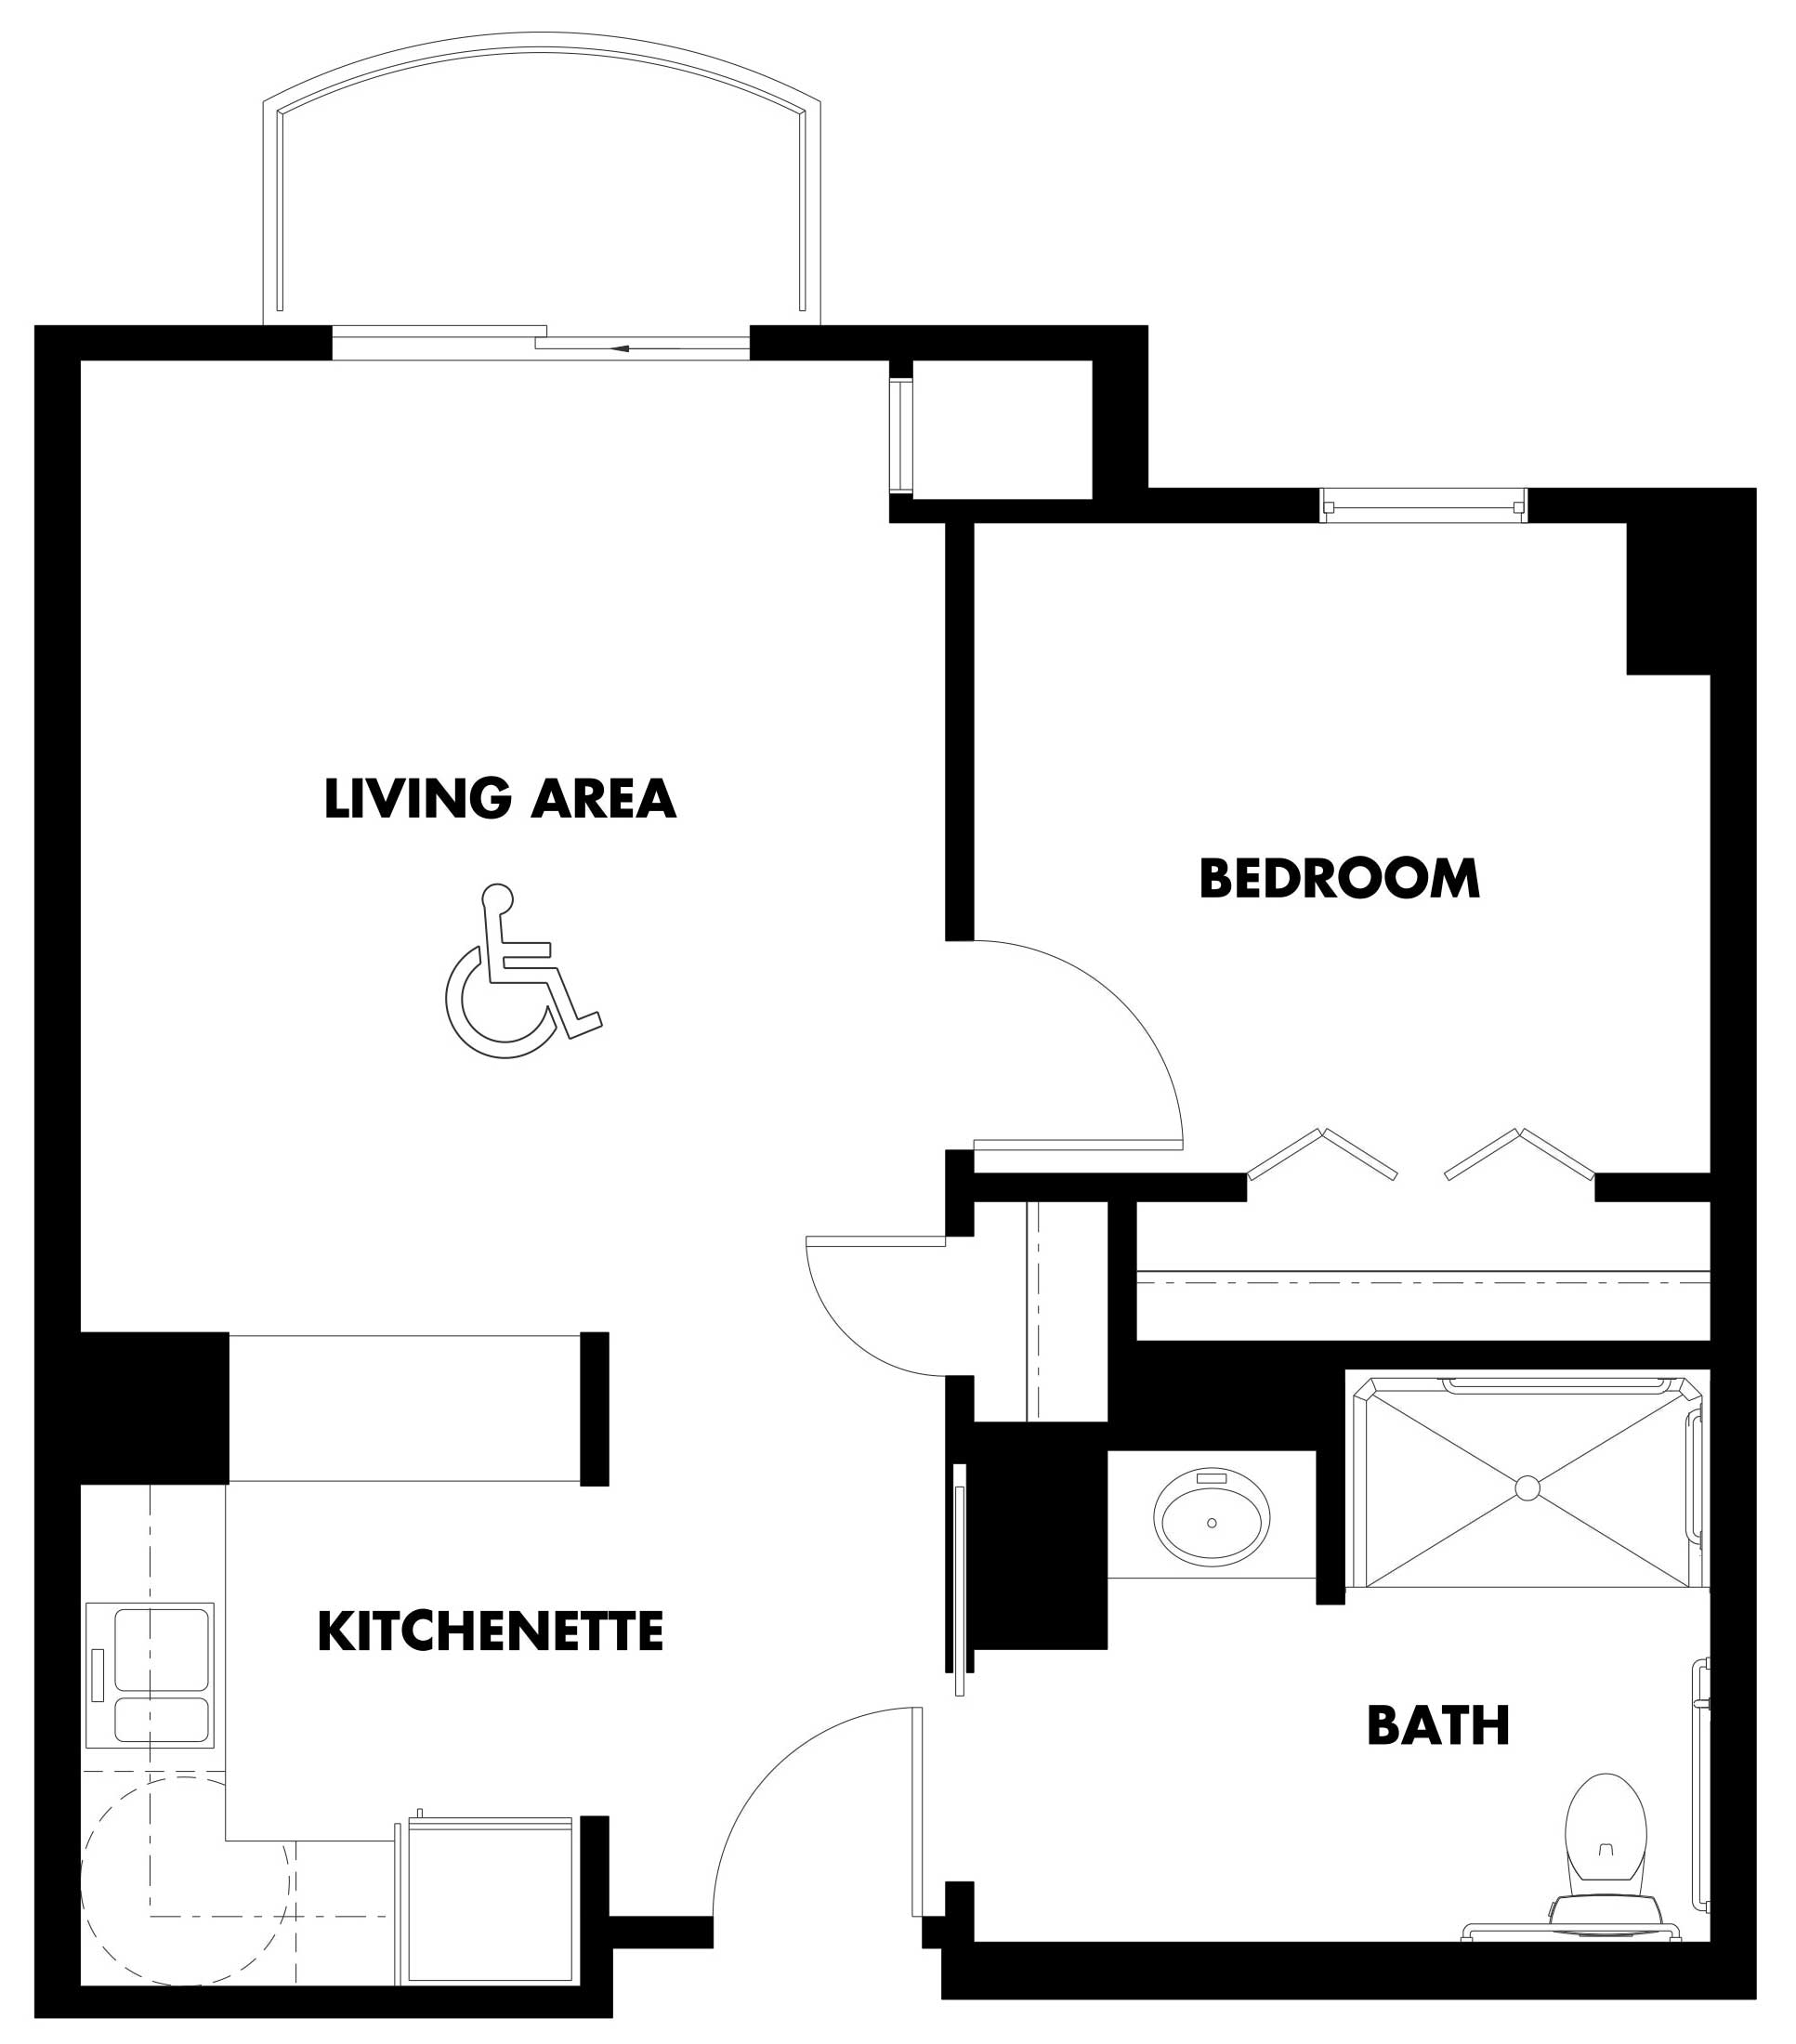 A one bedroom kensington floor plan at Kingswood Senior Living Located in Kansas City, MO.